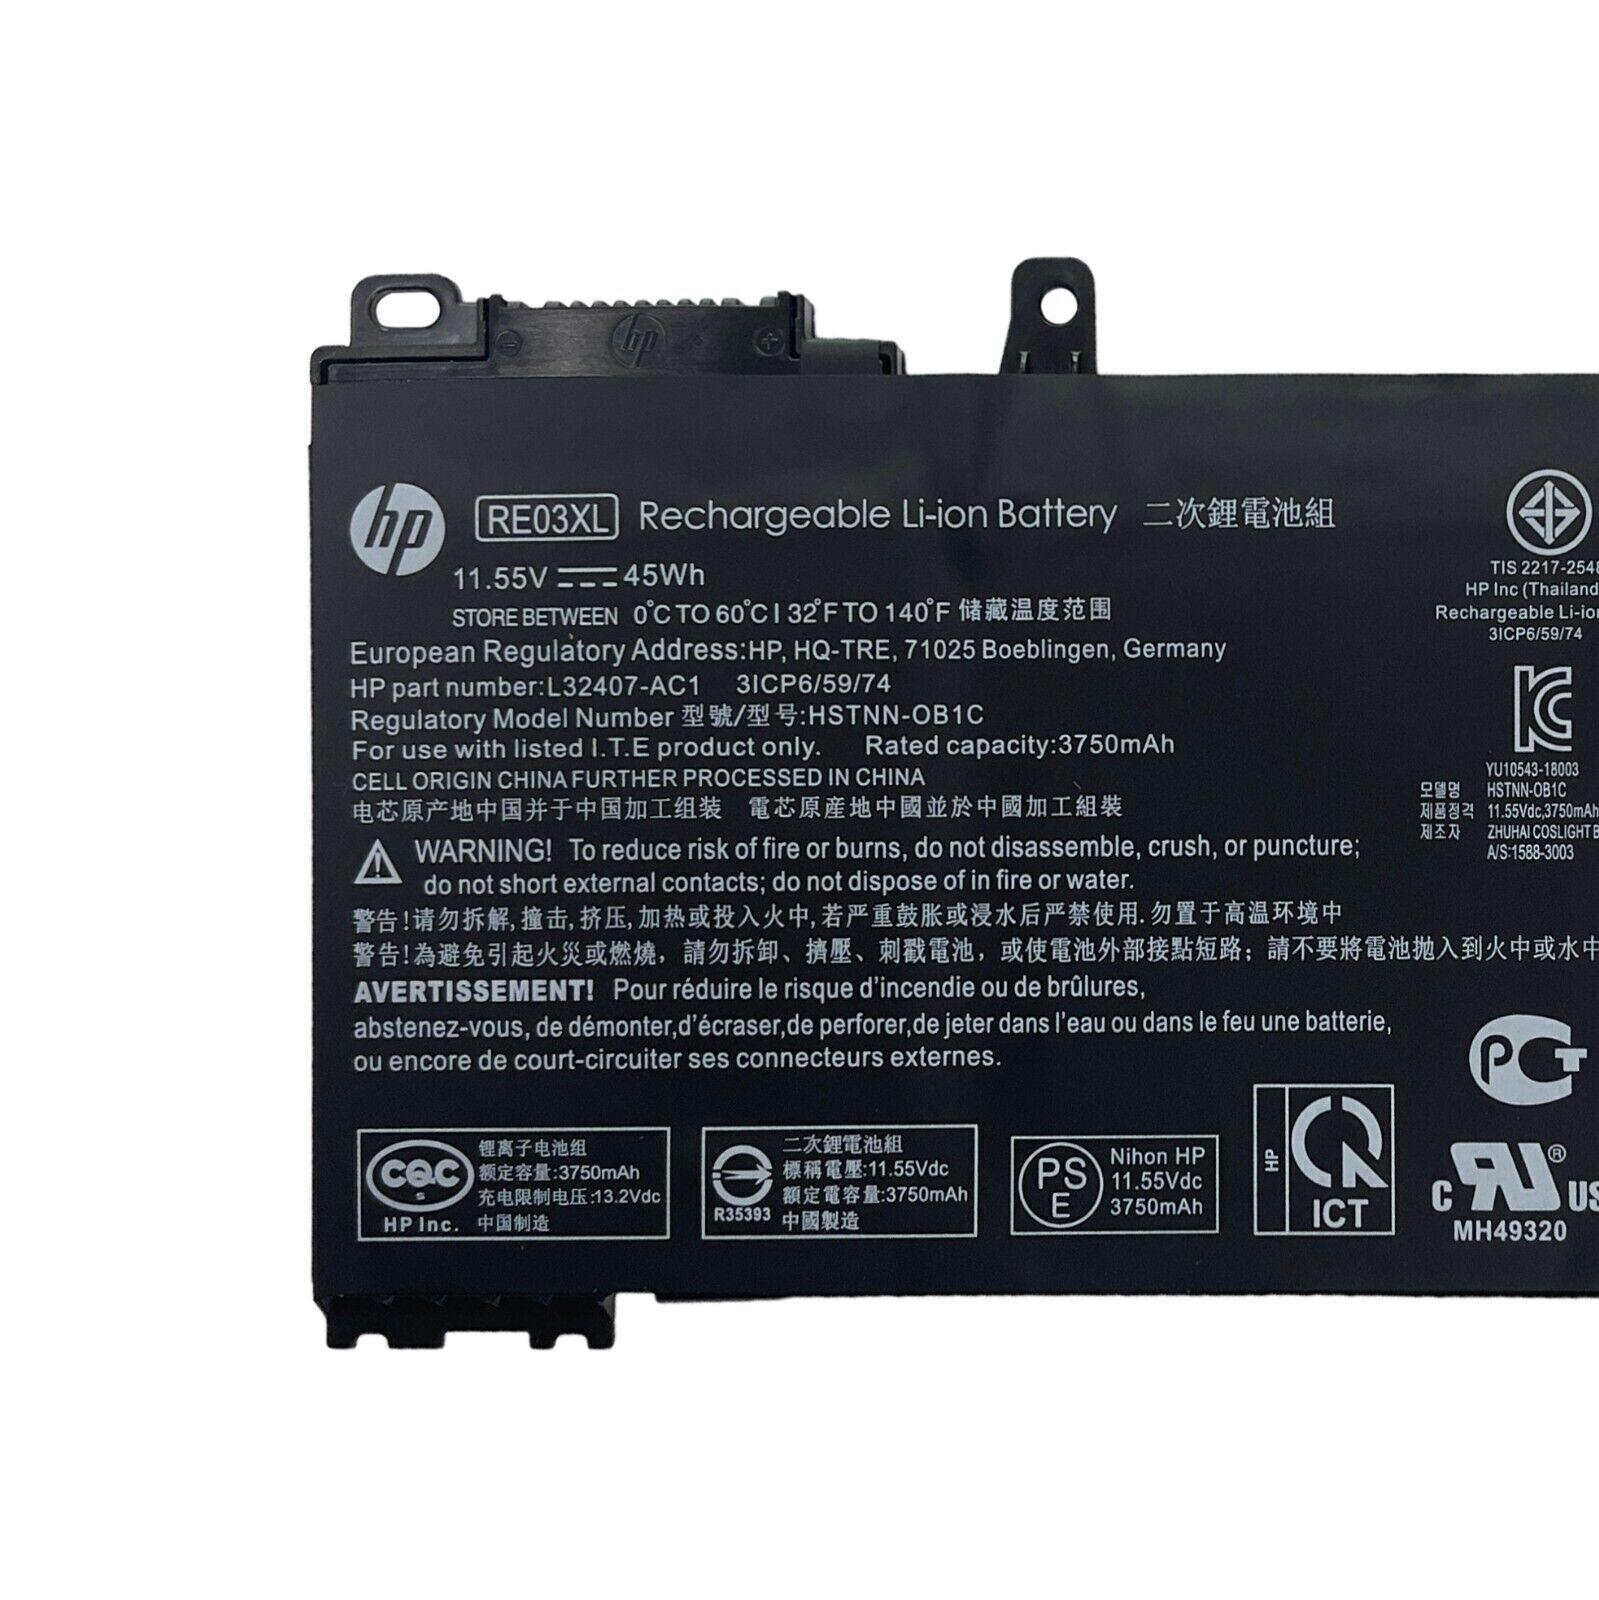 OEM RE03XL Battery For HP ProBook 440 450 G6 L32407-AC1 L32407-2C1 L32656-005